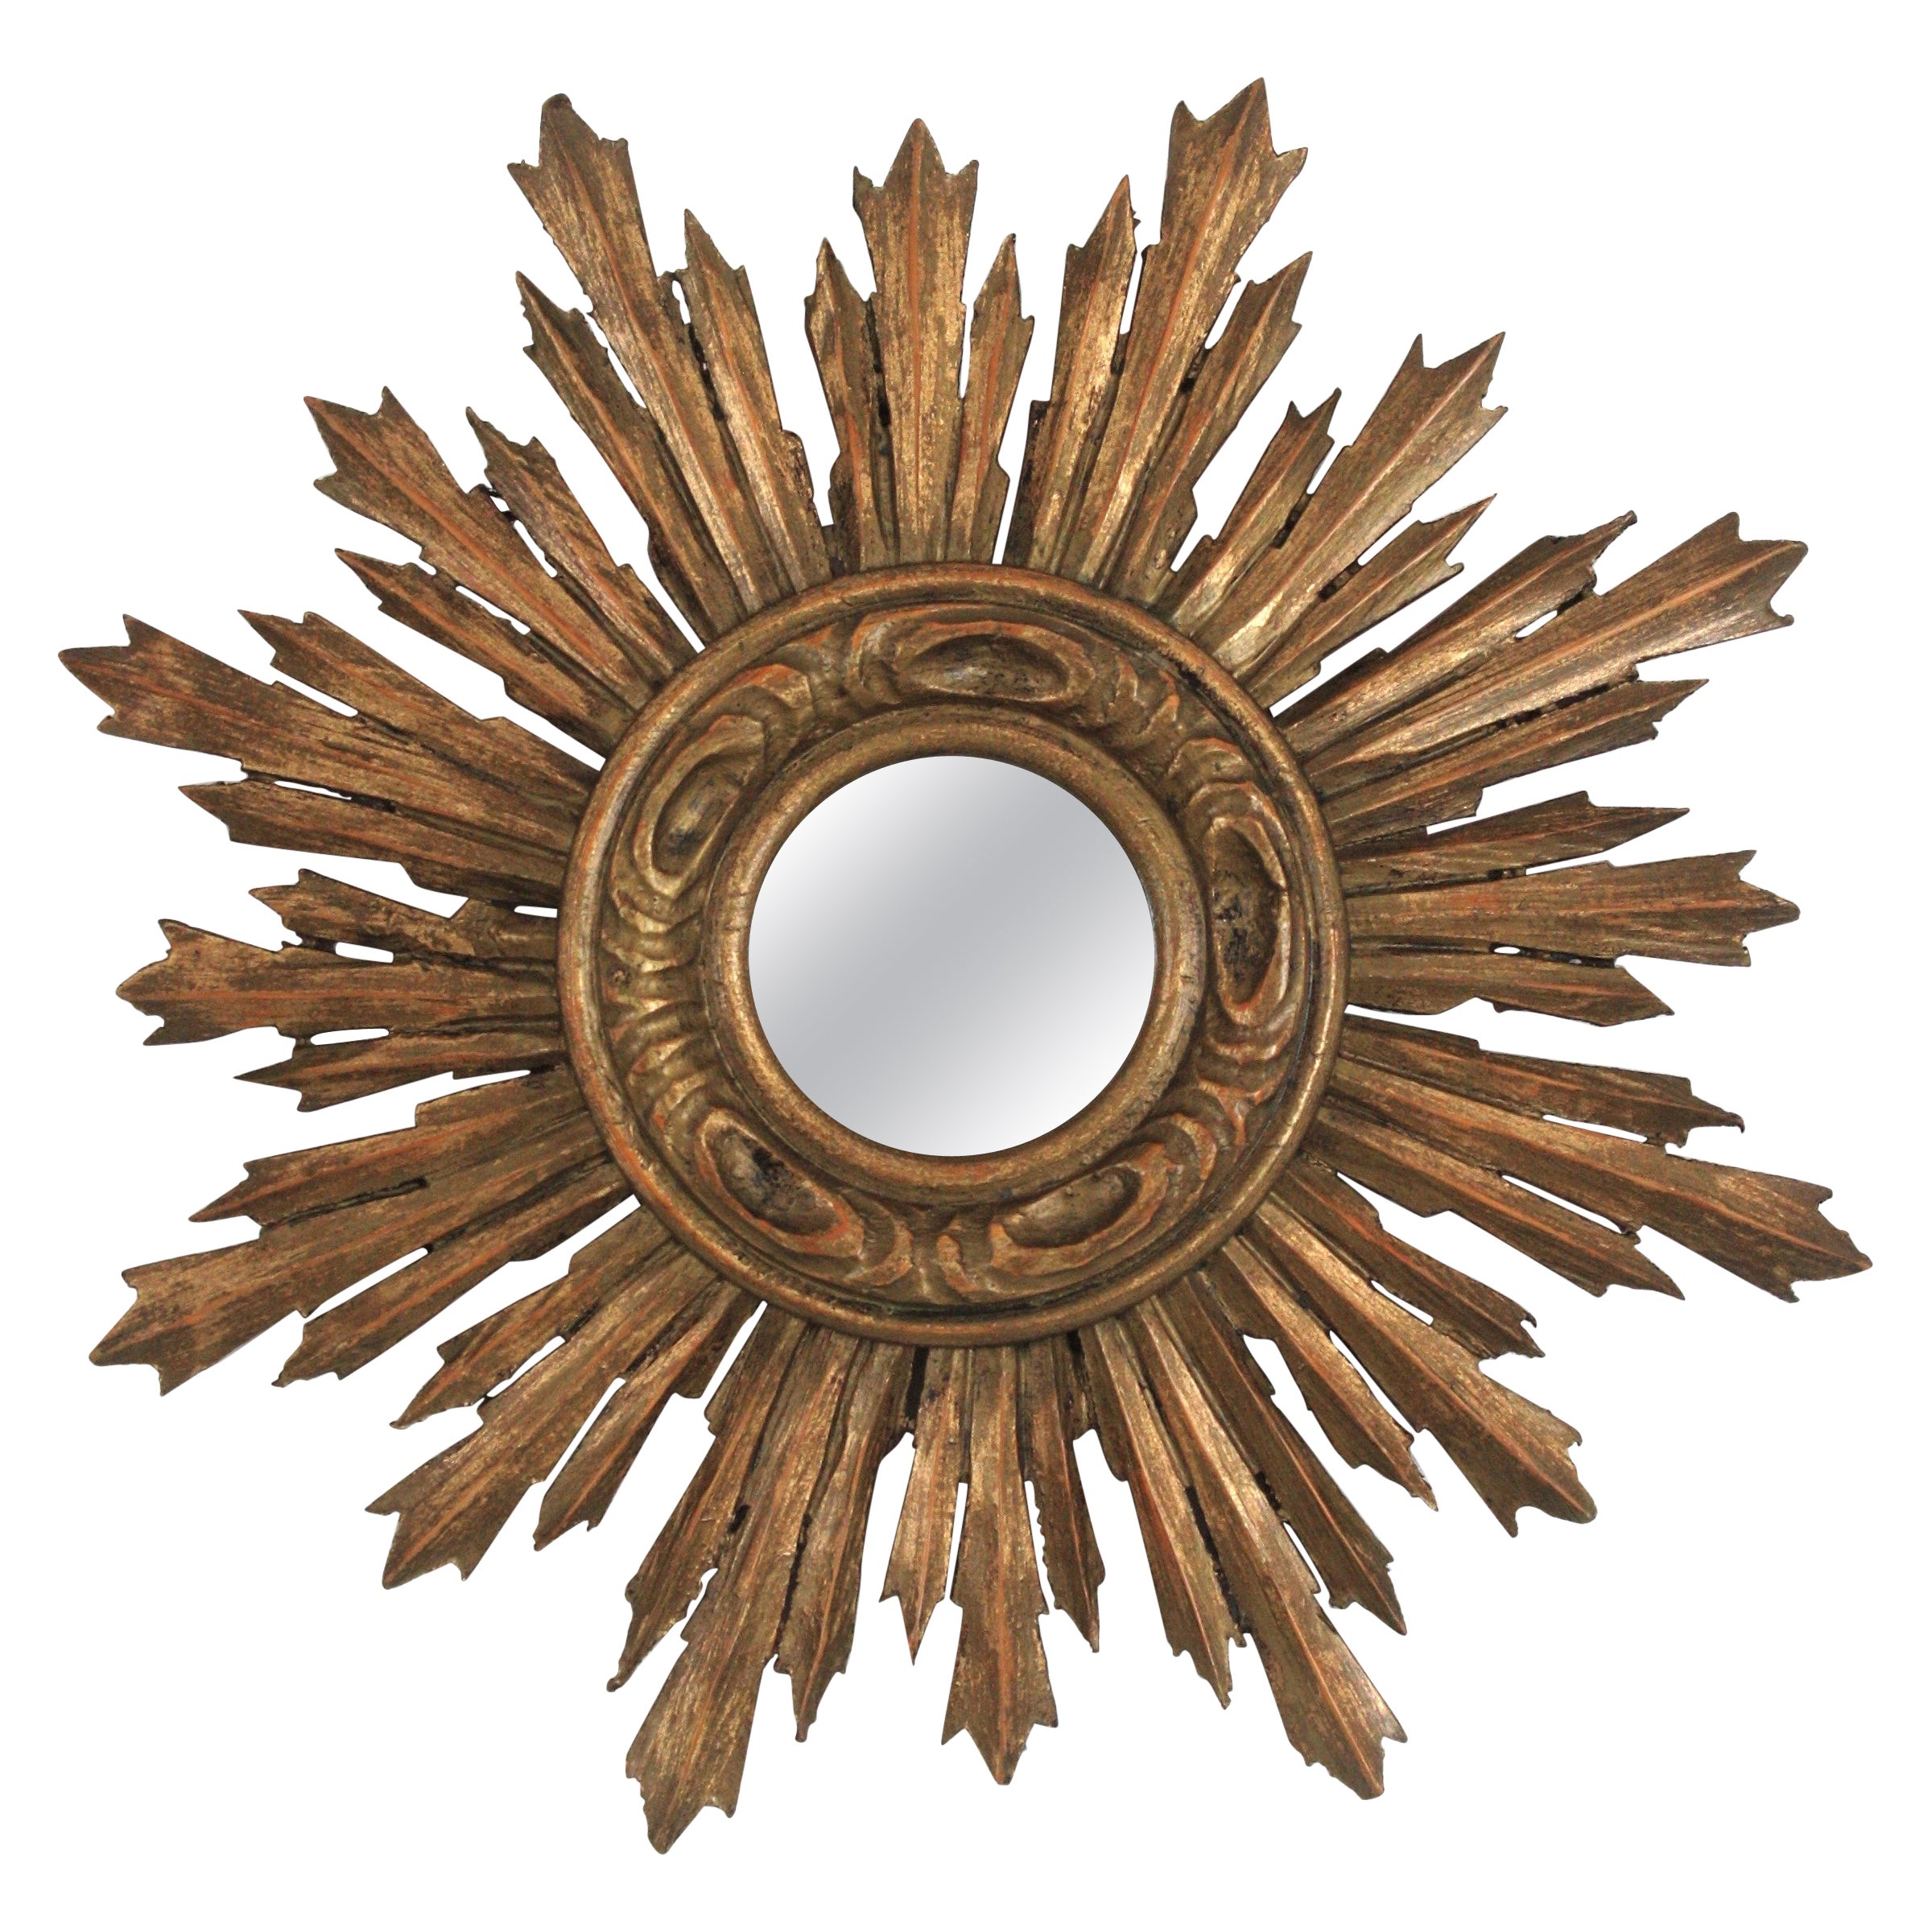 Sunburst Giltwood Mirror in Small Scale, Spanish Baroque  For Sale